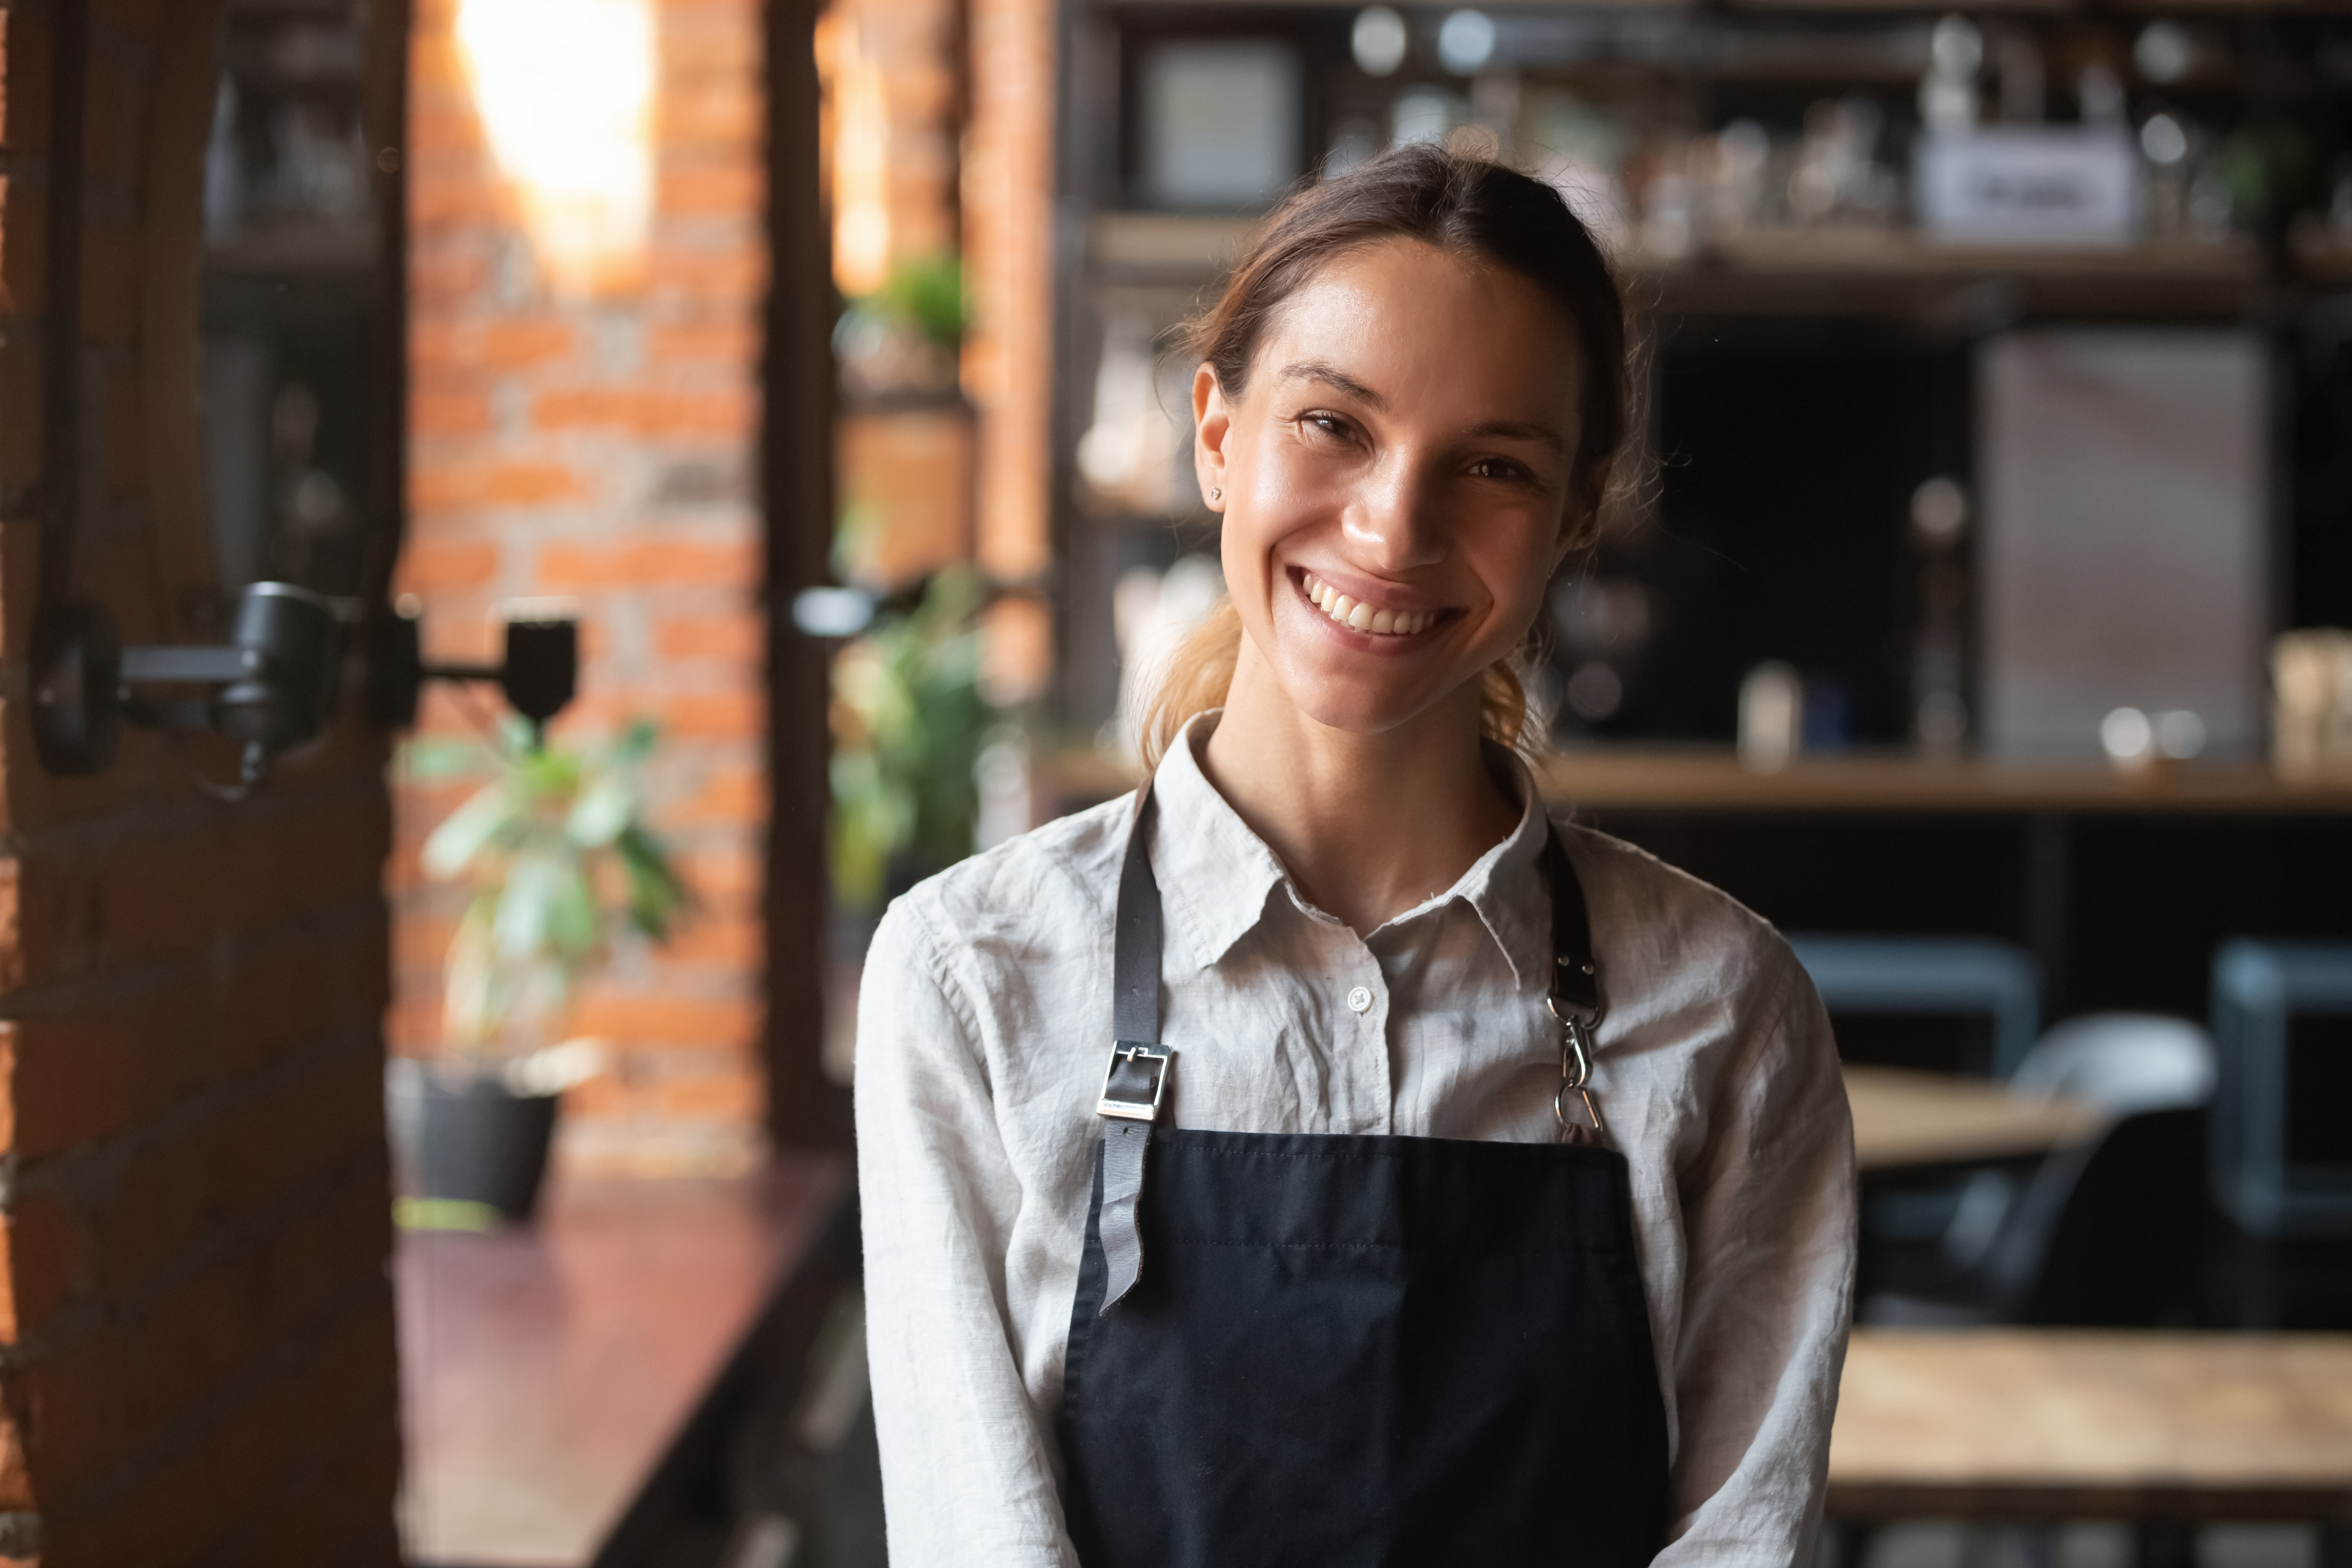 A waitress smiling | Source: Pexels